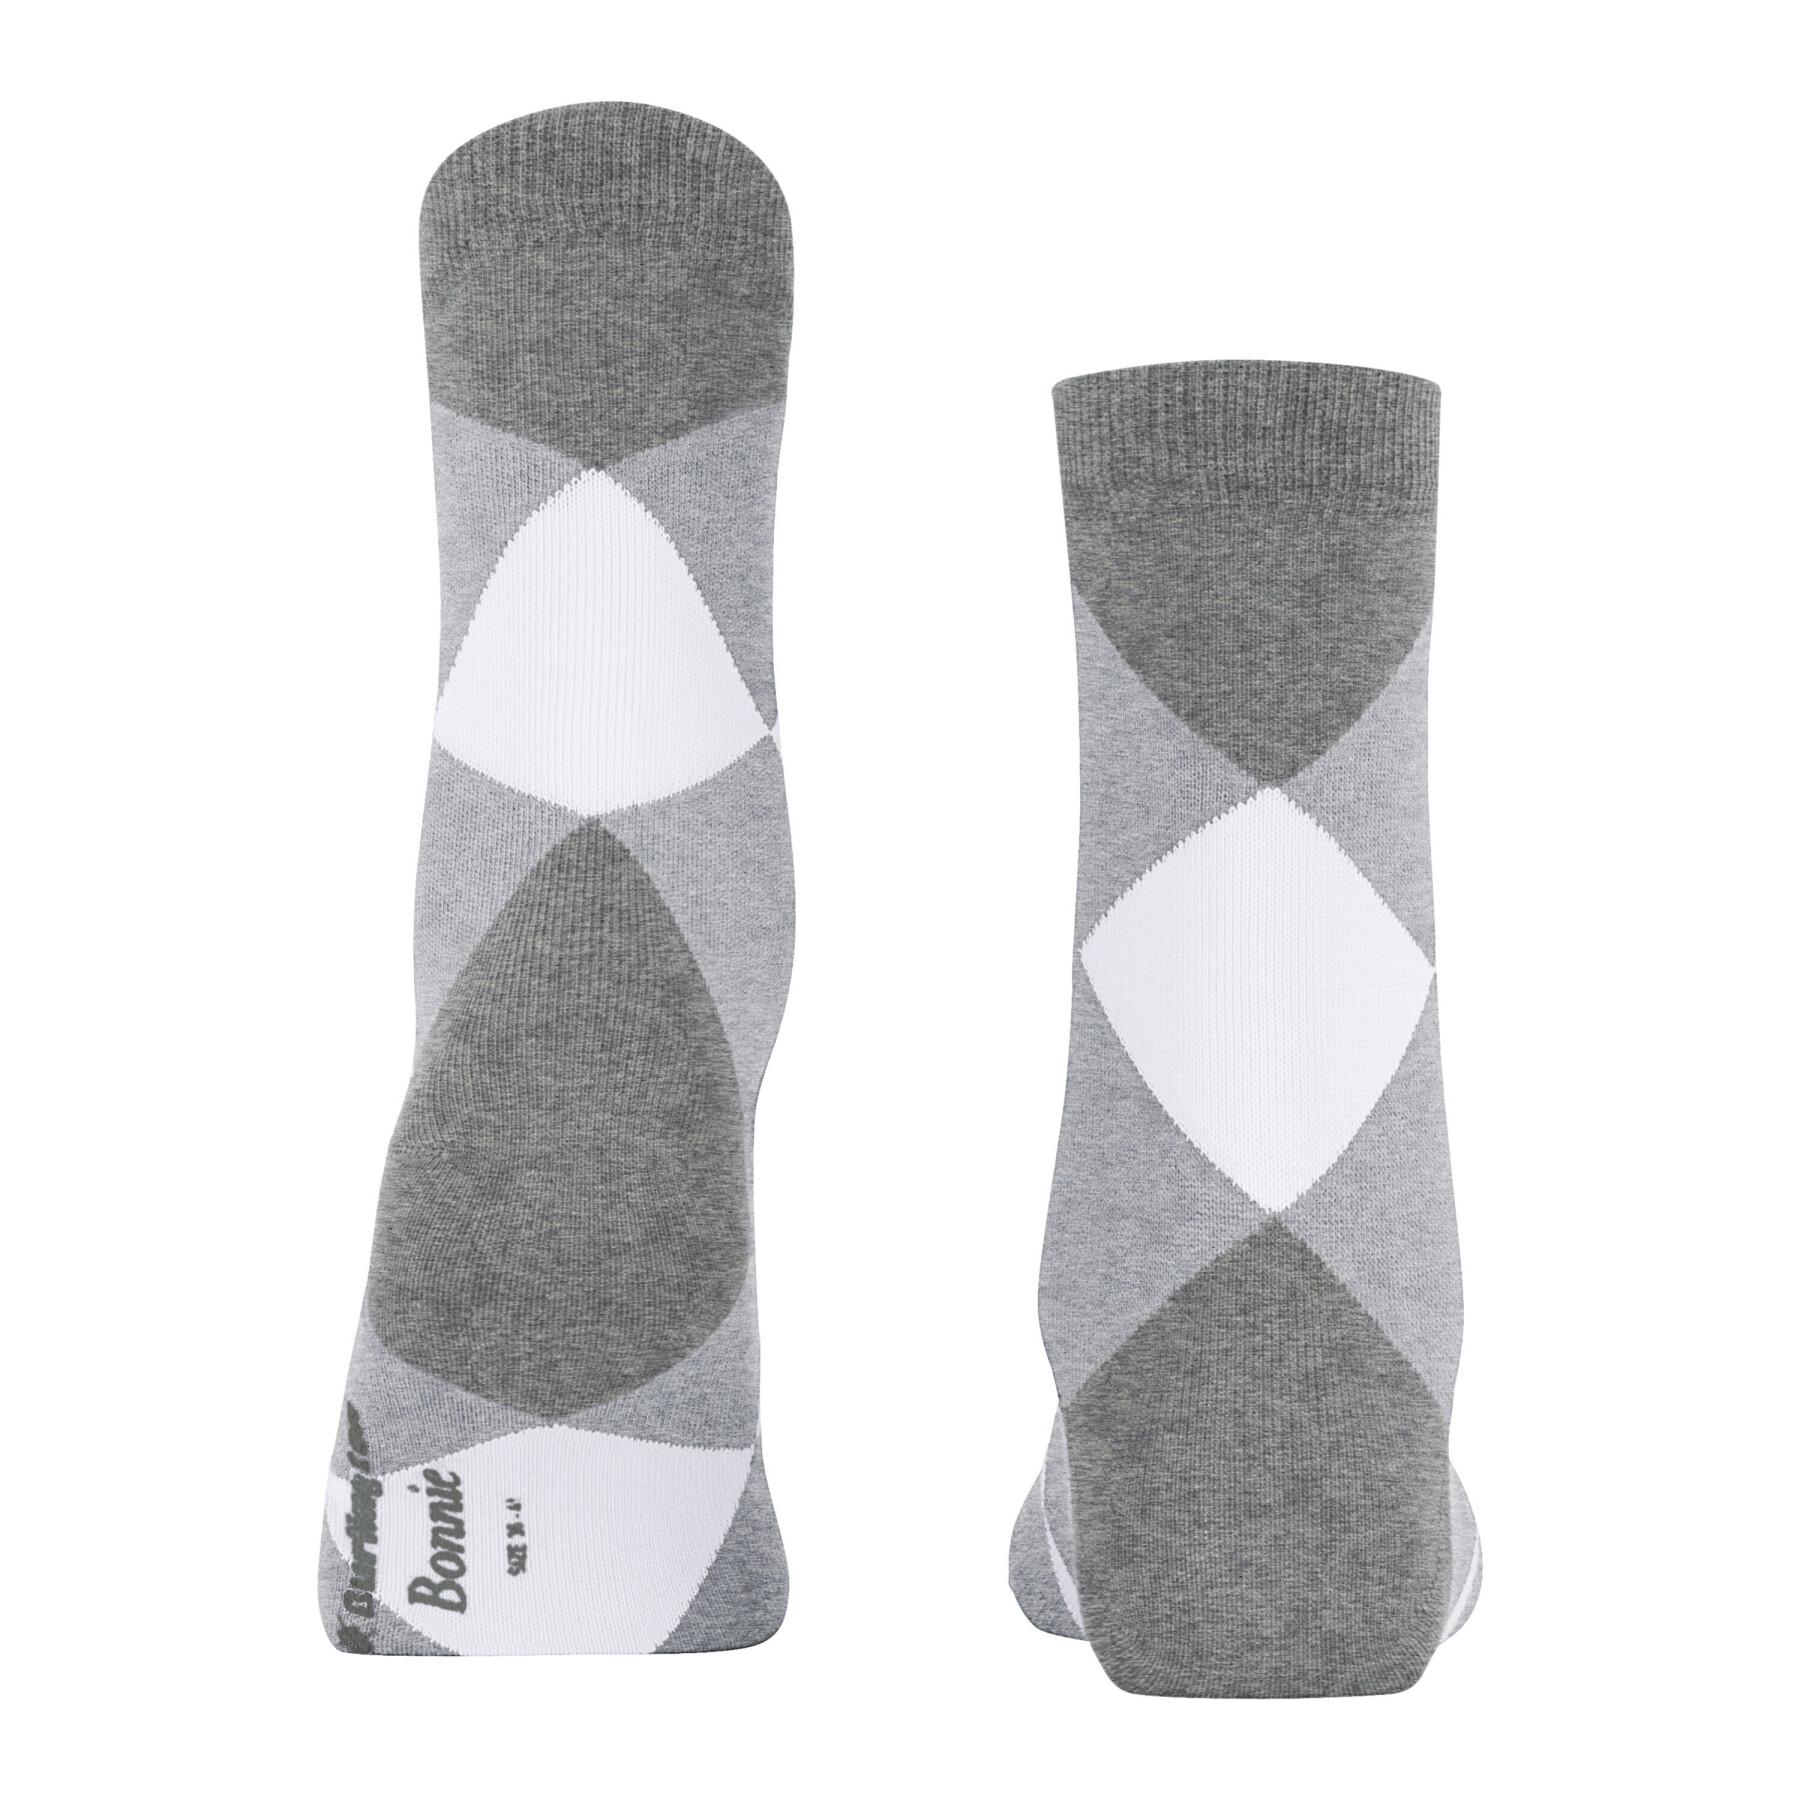 Women's short socks Burlington Bonnie